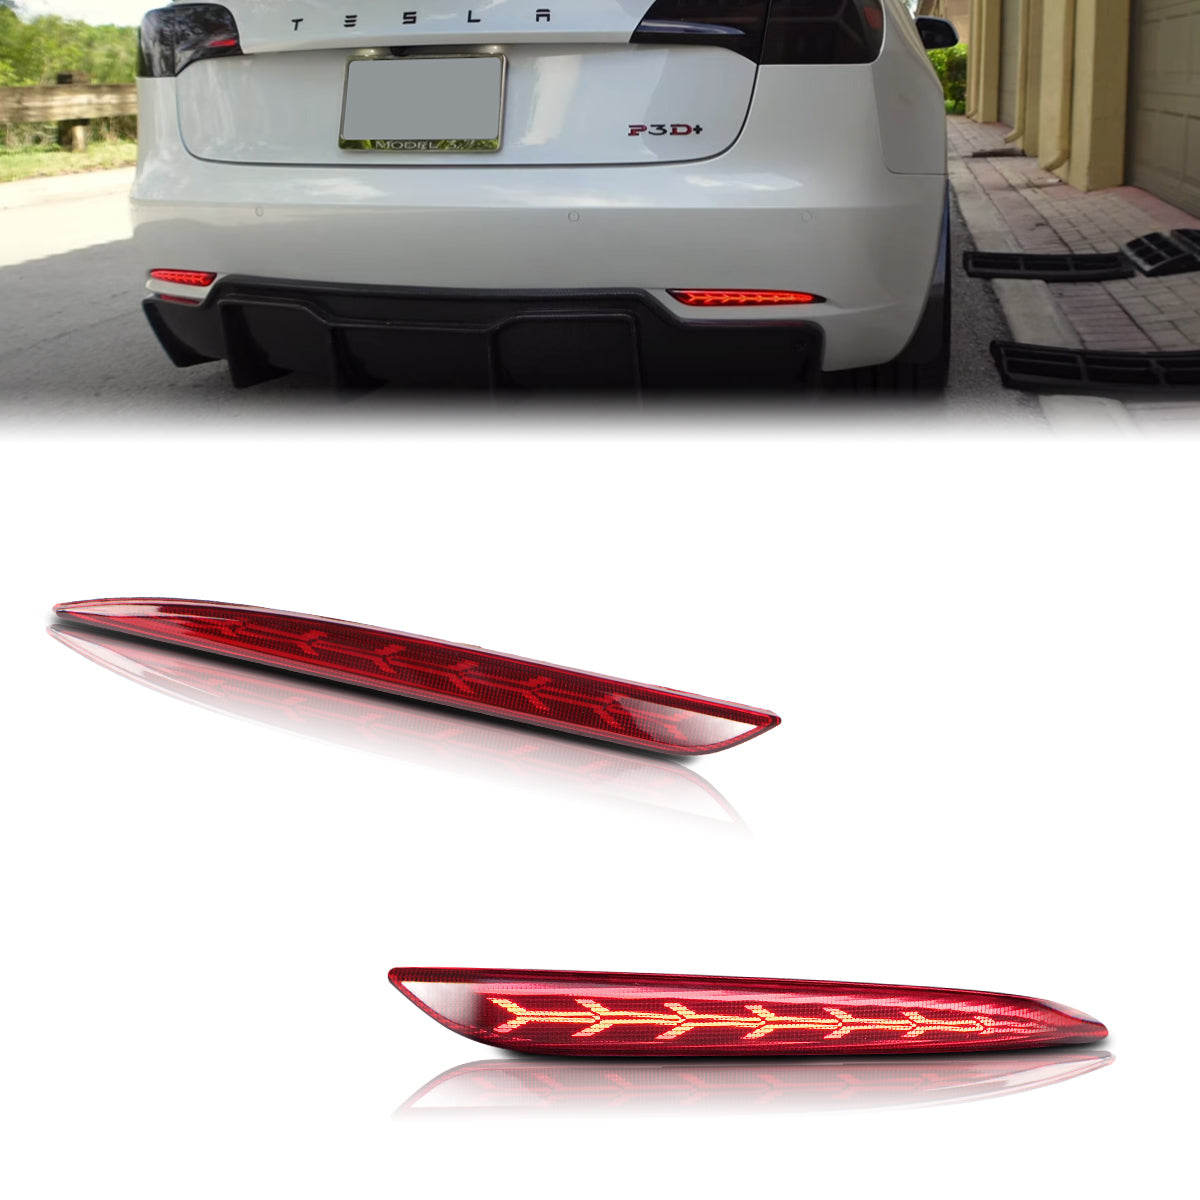 Model 3/Y Rear Bumper Tail Light-Tes studioLighting Upgrade,Model Y,Model 3,Model 3 Exterior,Model Y Exteriortesla accessories